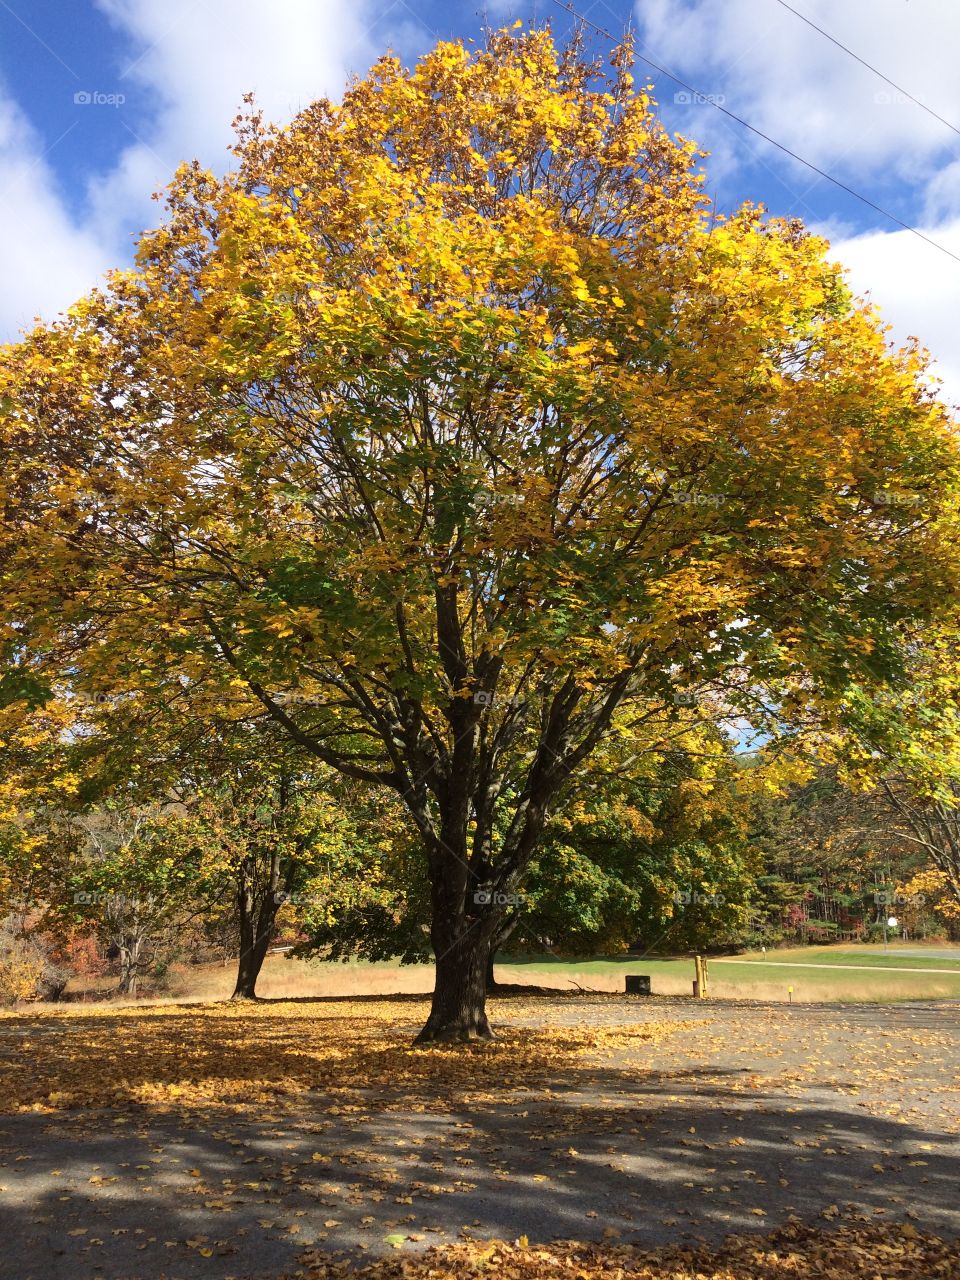 Patapsco state park . Beautiful tree with beautiful fall colors.